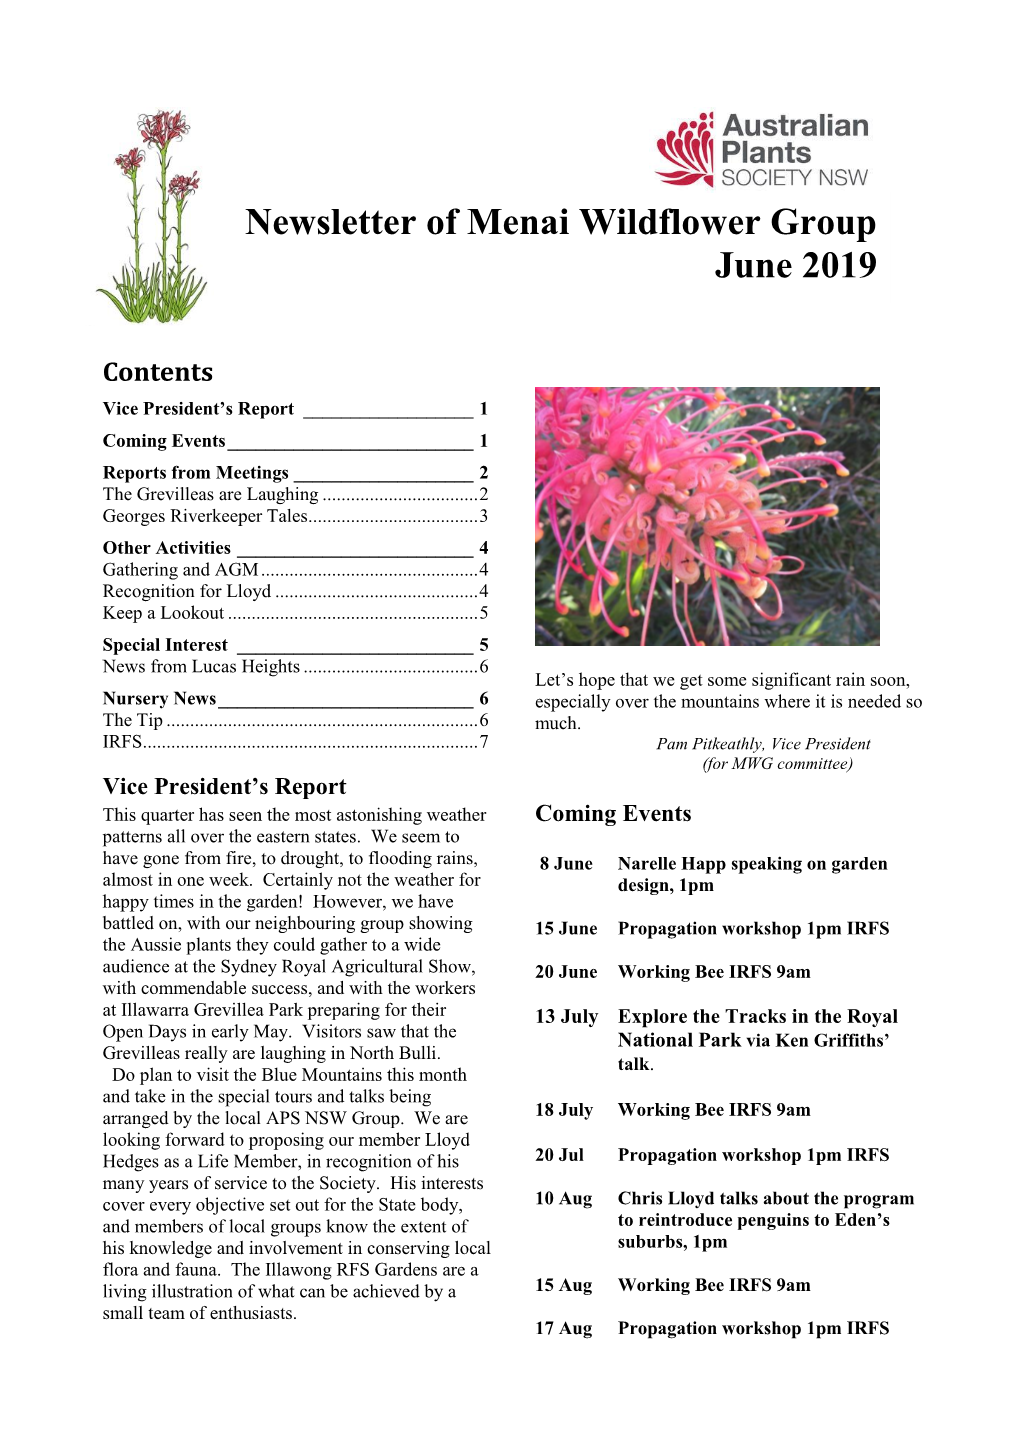 Newsletter of Menai Wildflower Group June 2019